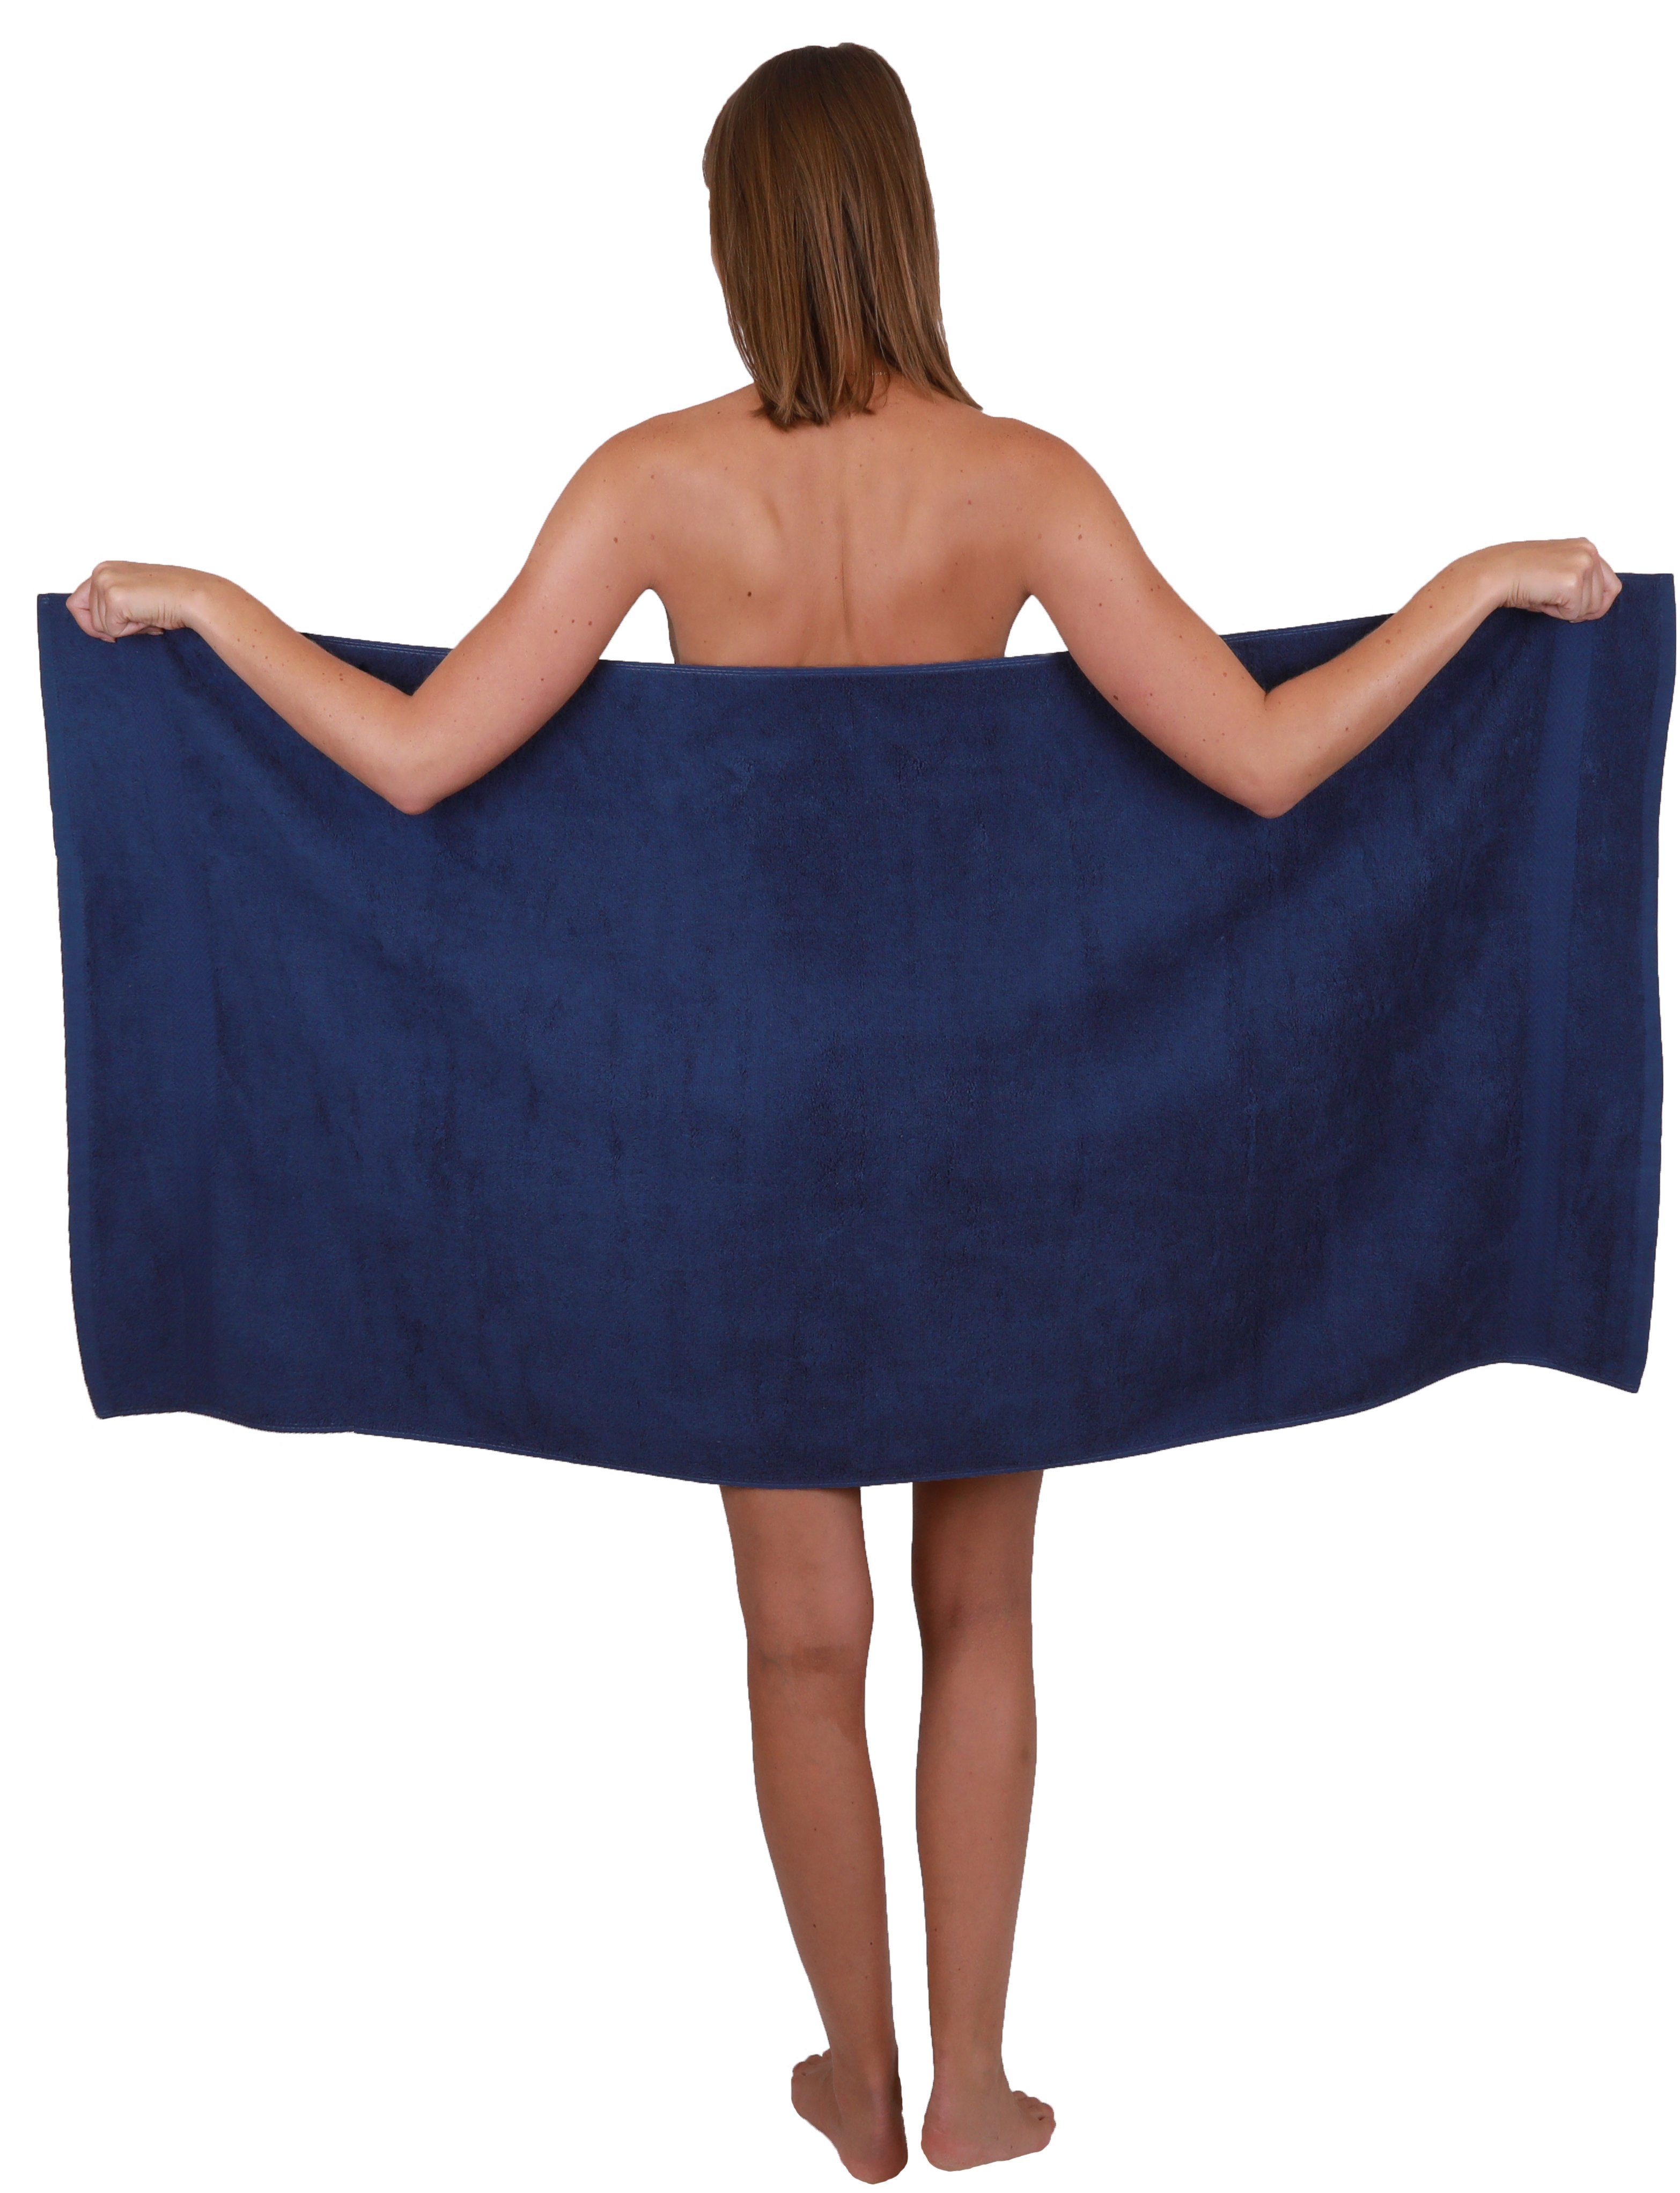 Betz Handtuch Set 10-tlg. PREMIUM dunkelblau 100% (10-tlg) Handtuch-Set Baumwolle, 100% Baumwolle